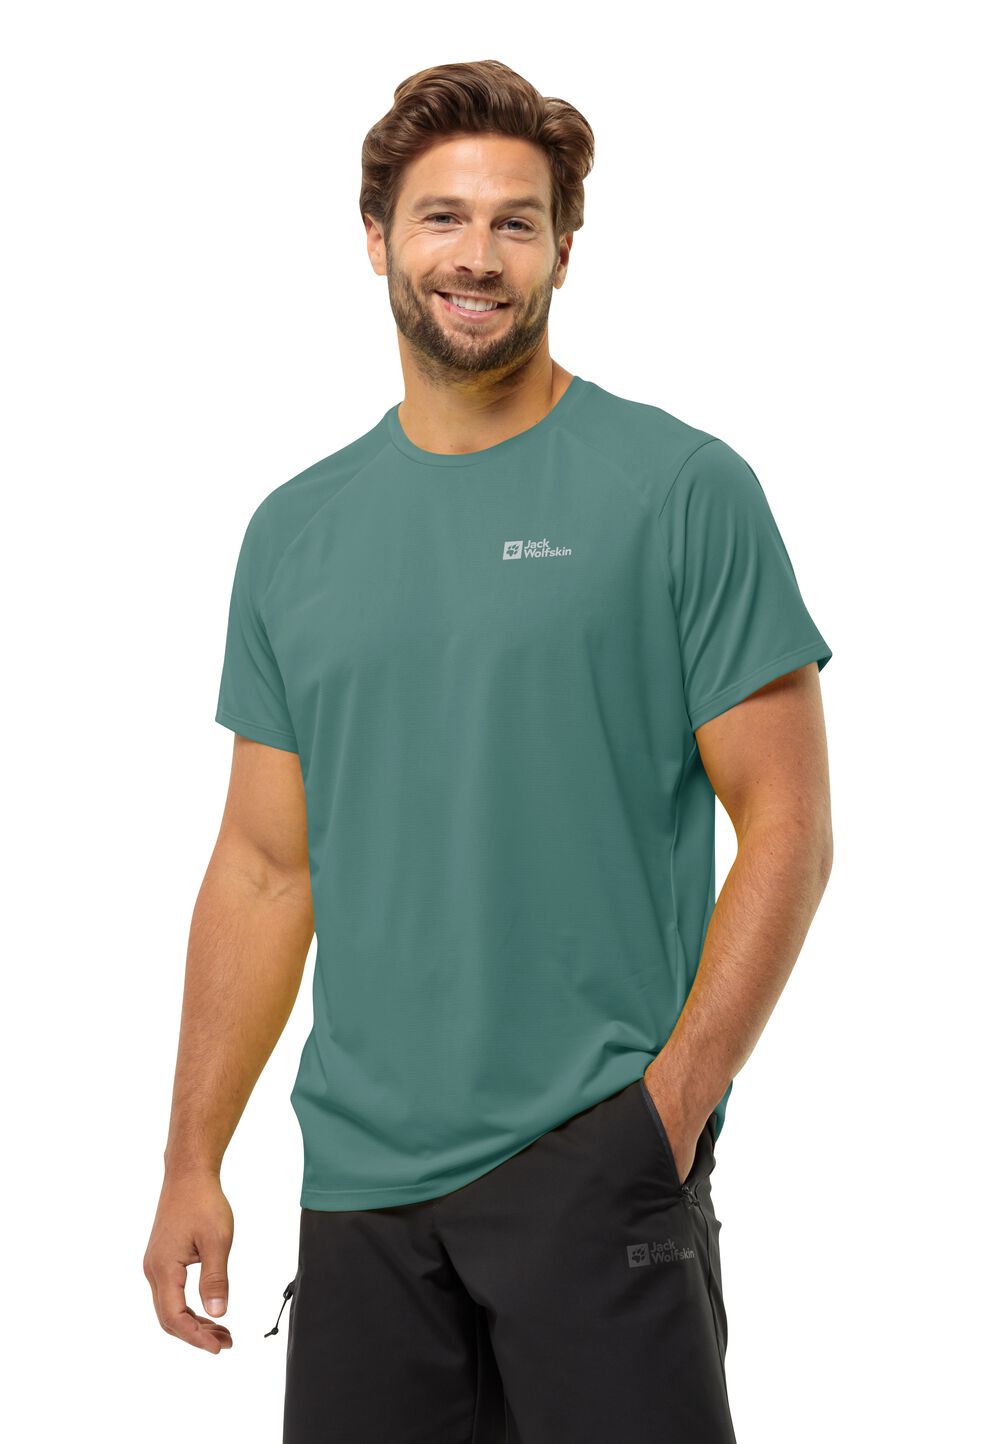 Jack Wolfskin Prelight Trail T-Shirt Men Functioneel shirt Heren M jade green jade green